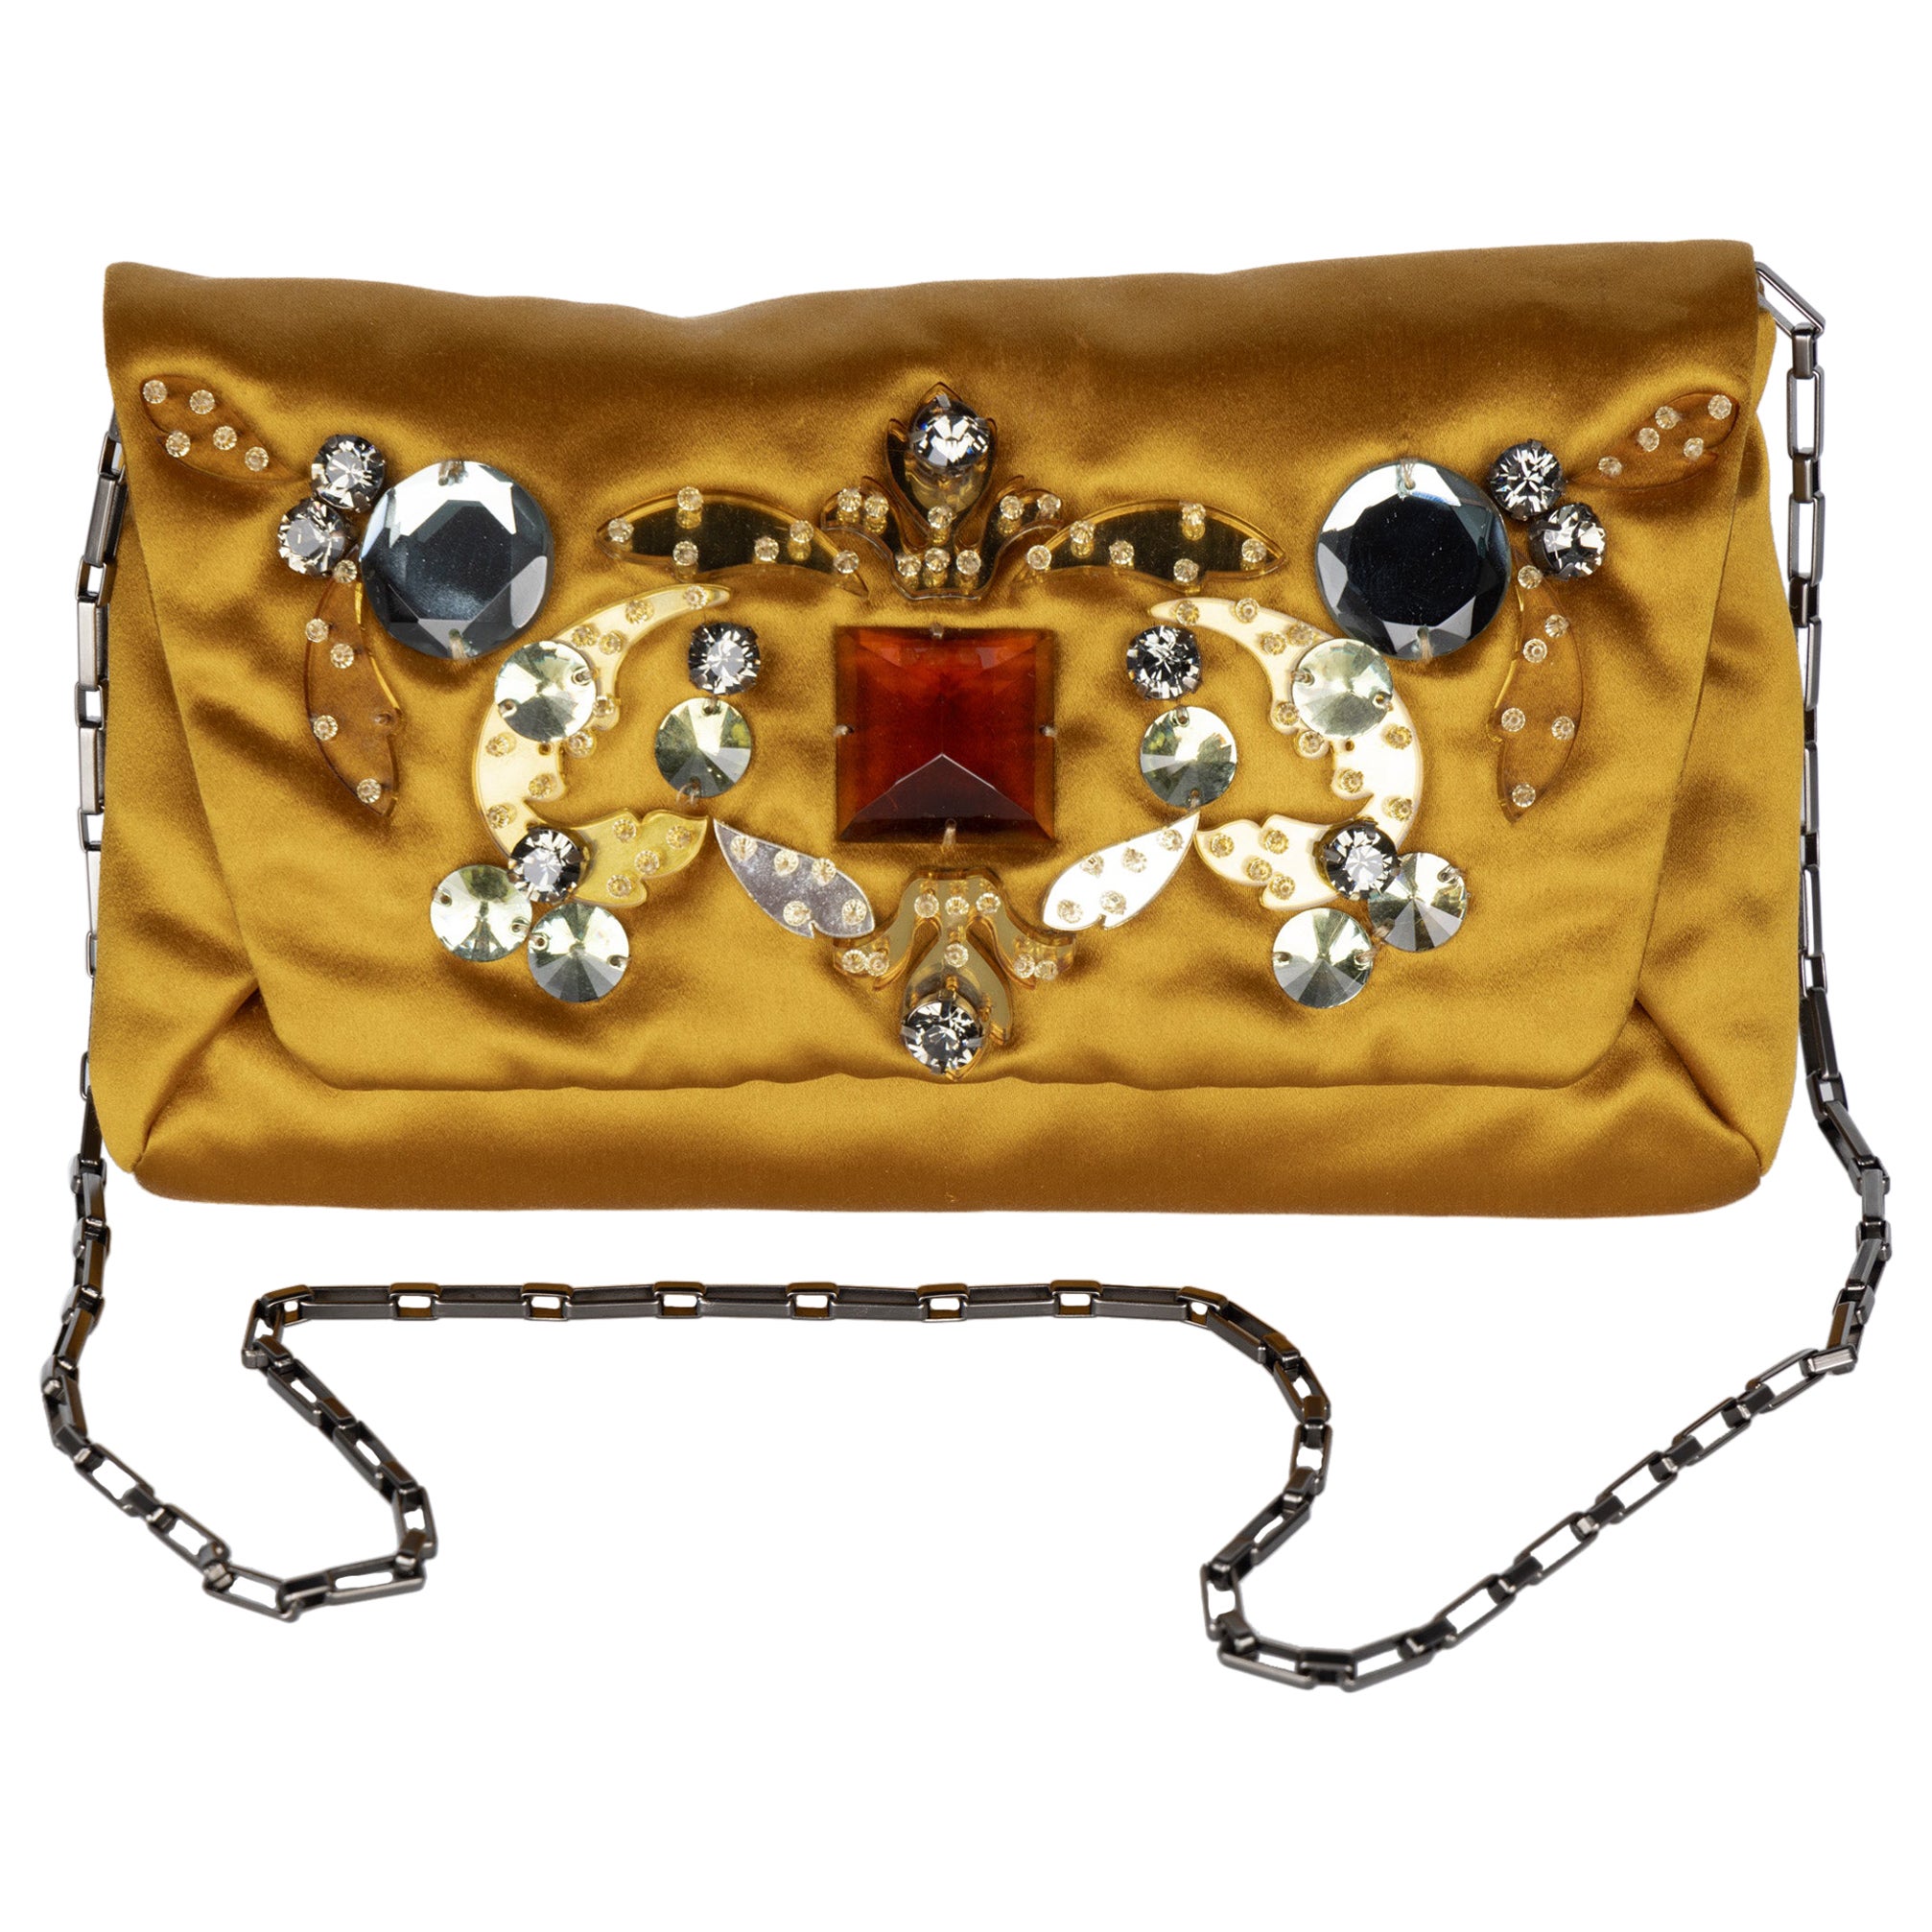 Lanvin Alber Elbaz Fall 2012 Satin Jewel Embellished Convertible Bag Clutch For Sale